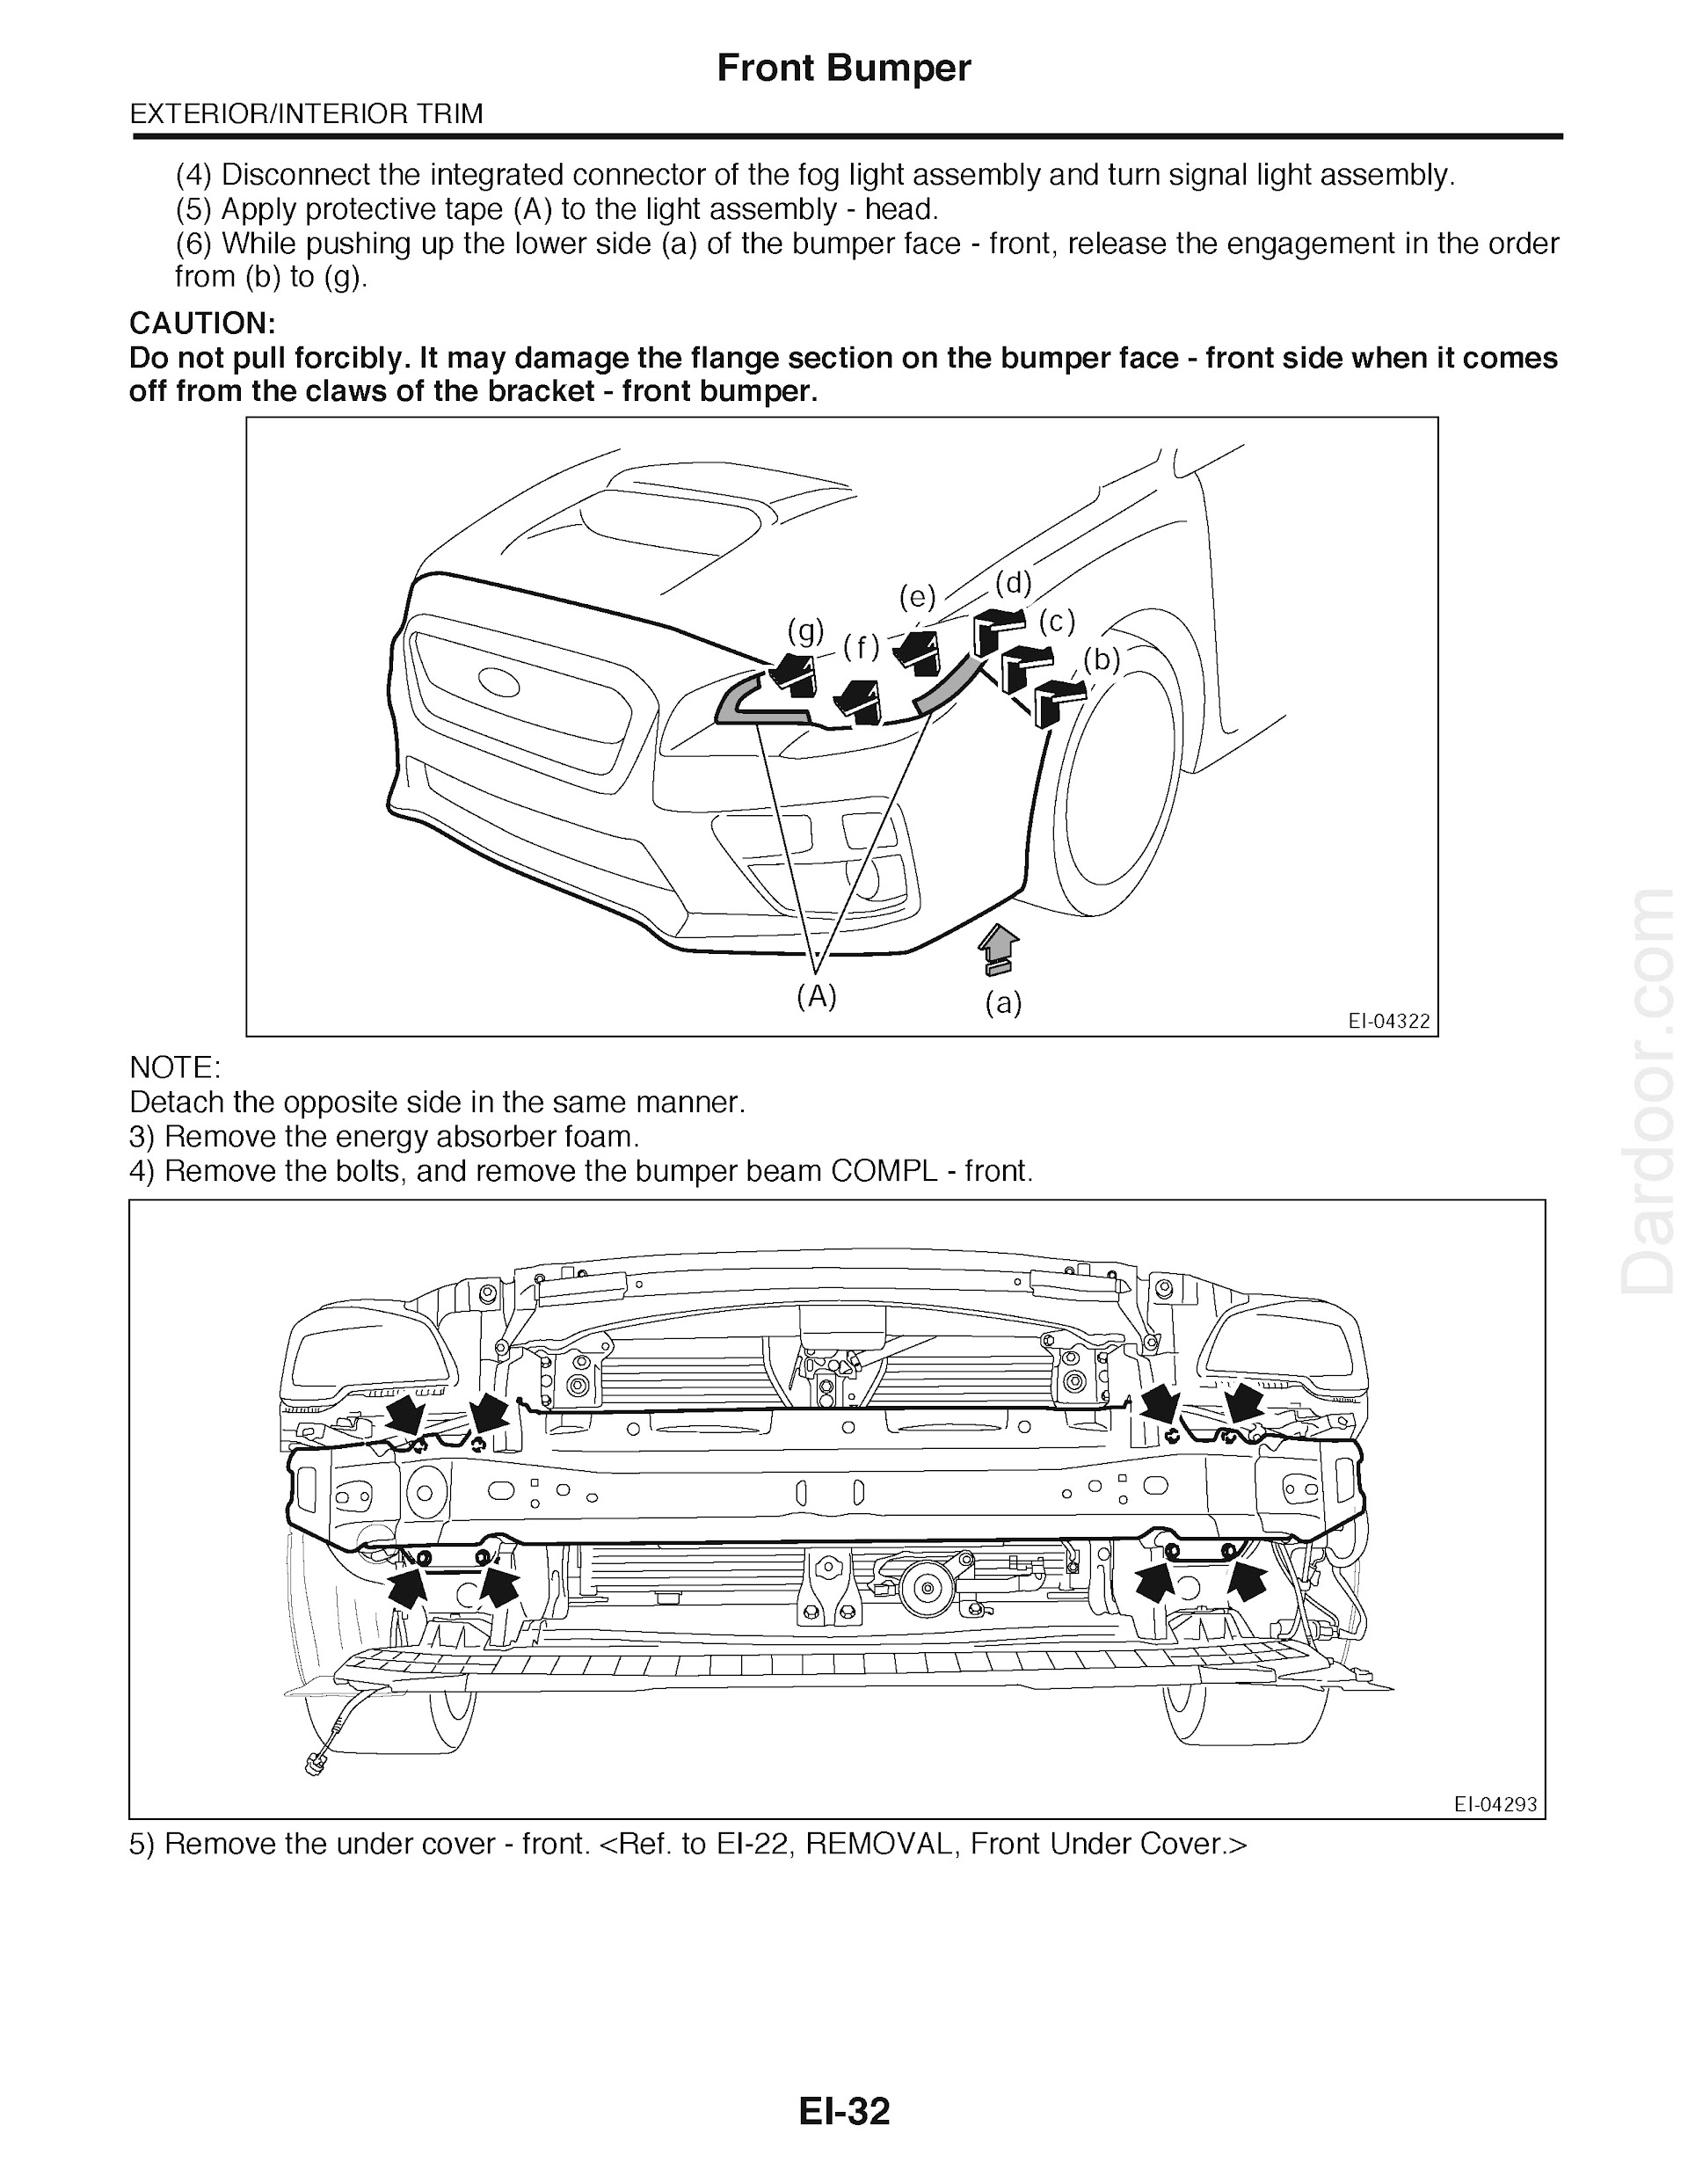 2017 Subaru WRX and WRX STI Repair Manual, Front Bumper Removal and Installation